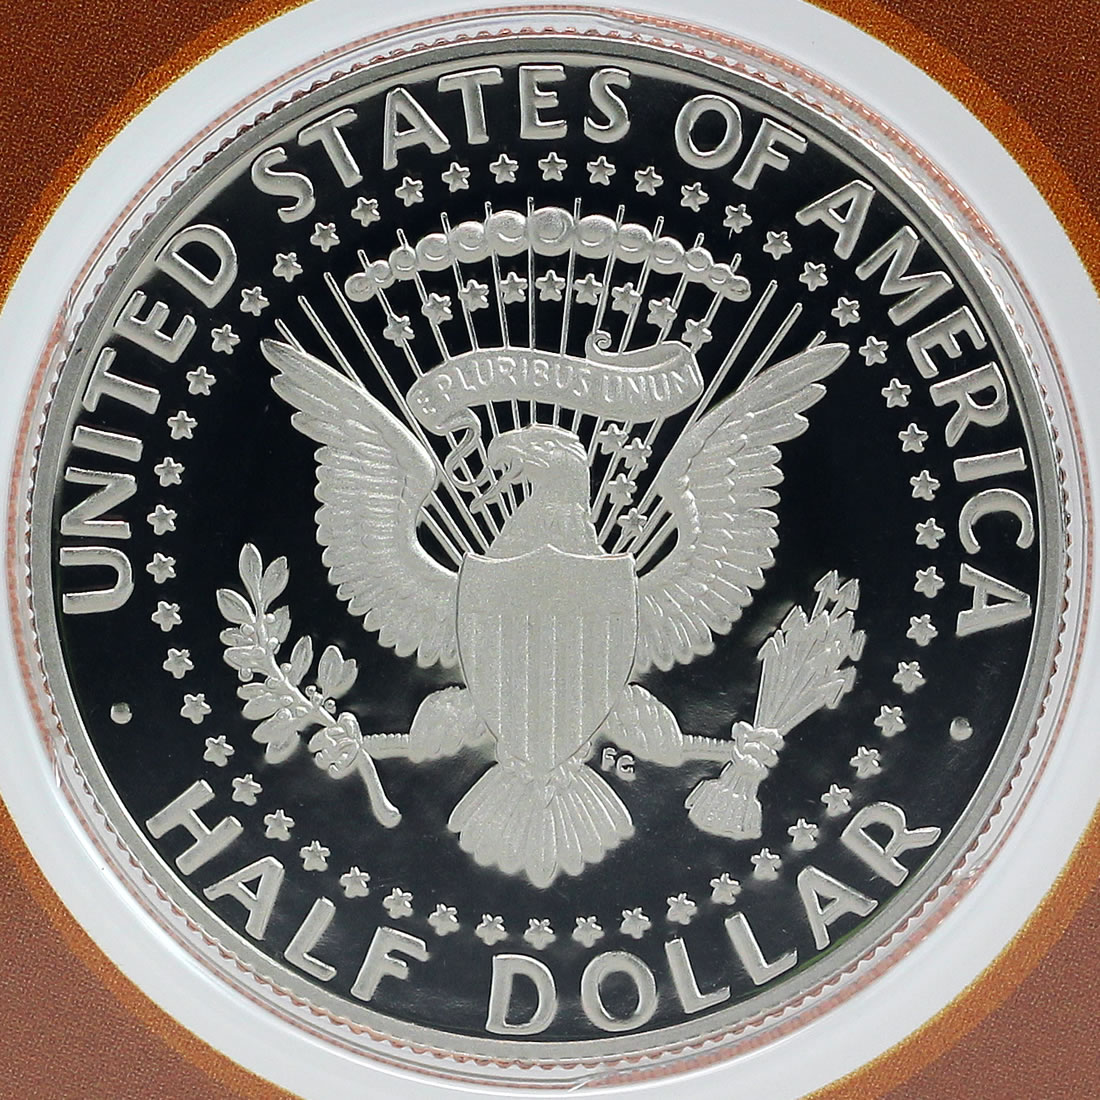 Mint roll Money 2008 P President Kennedy Half Dollar Fifty Cent Coin U.S 